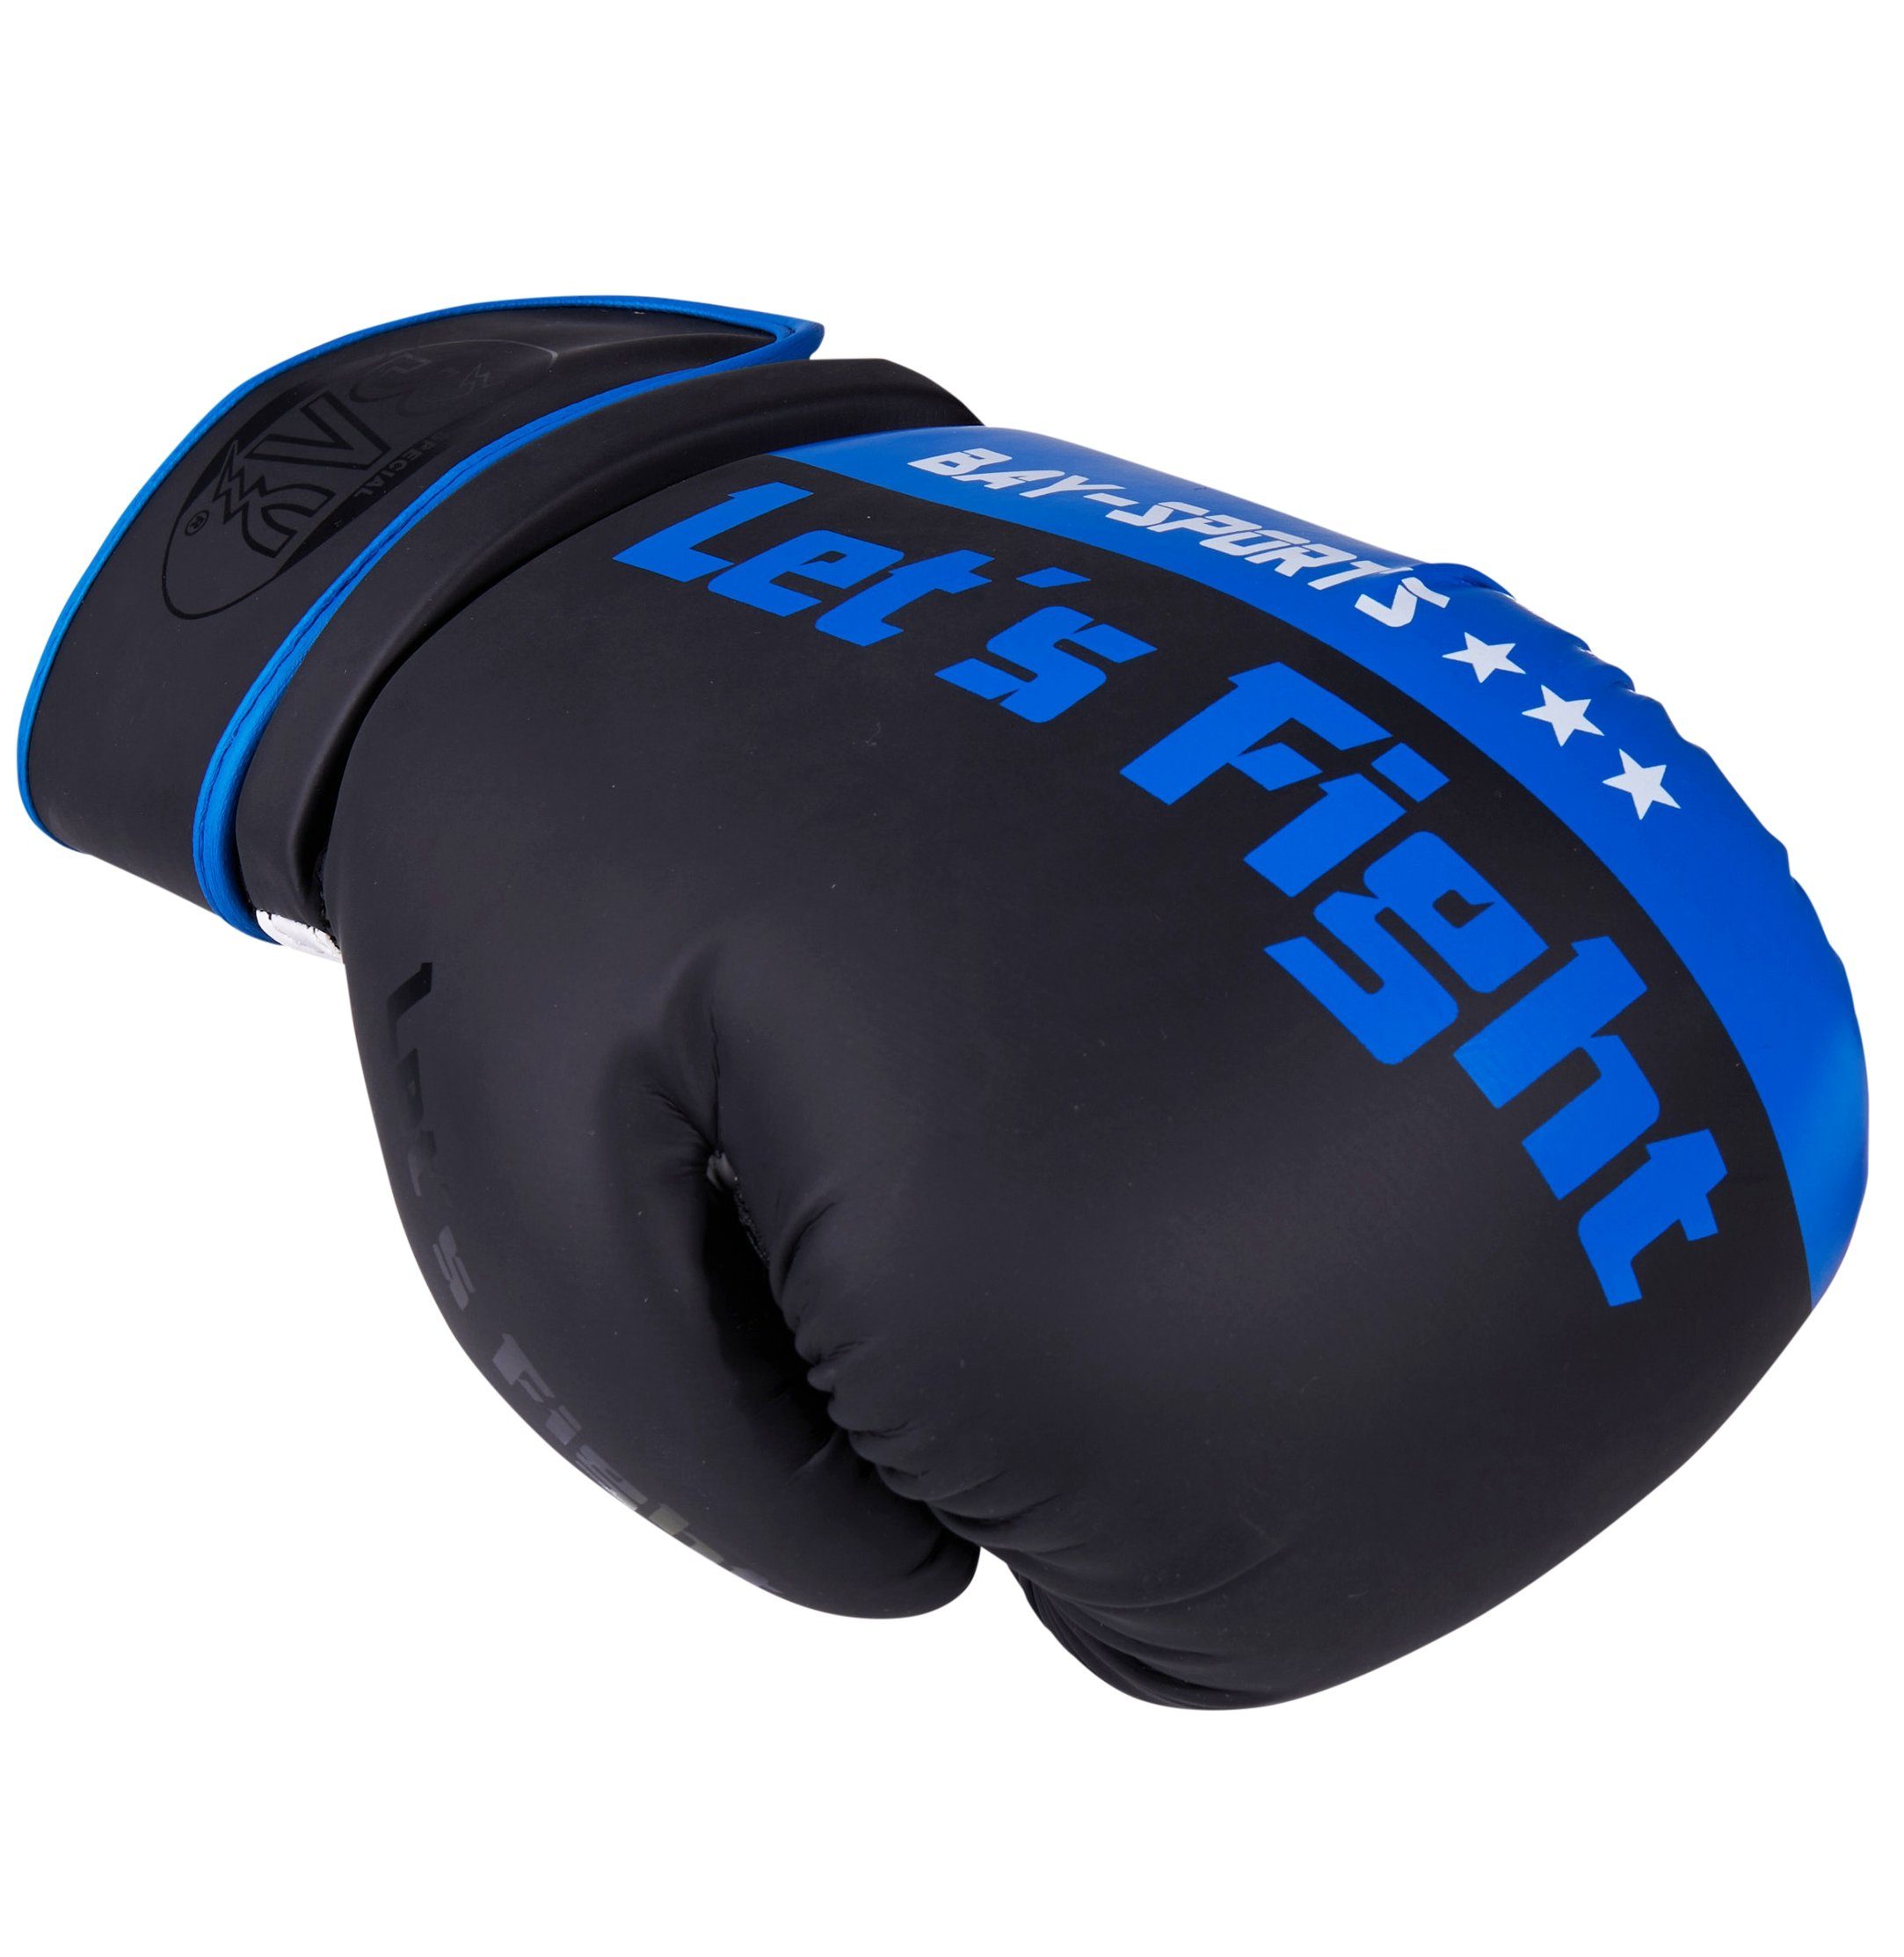 Boxen Kickboxe Box-Handschuhe blau Mesh Lets Boxhandschuhe Fight BAY-Sports